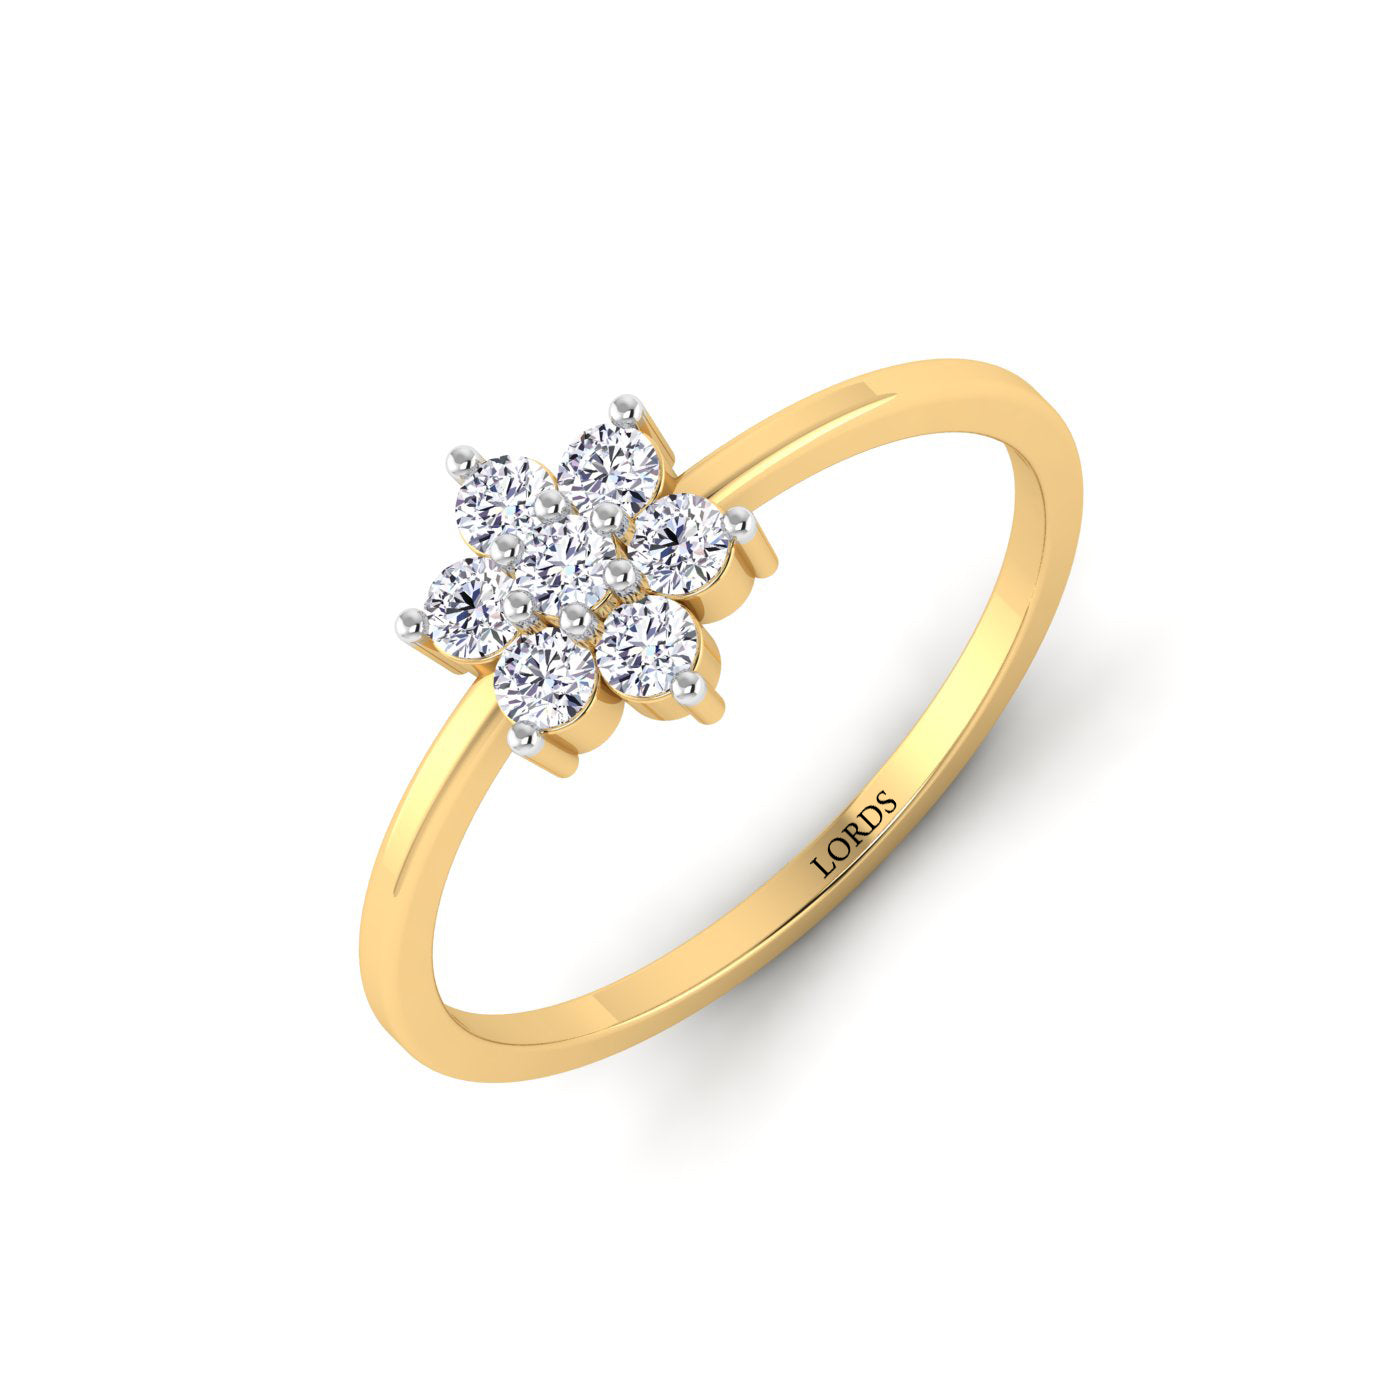 Starlit Beauty Diamond Ring